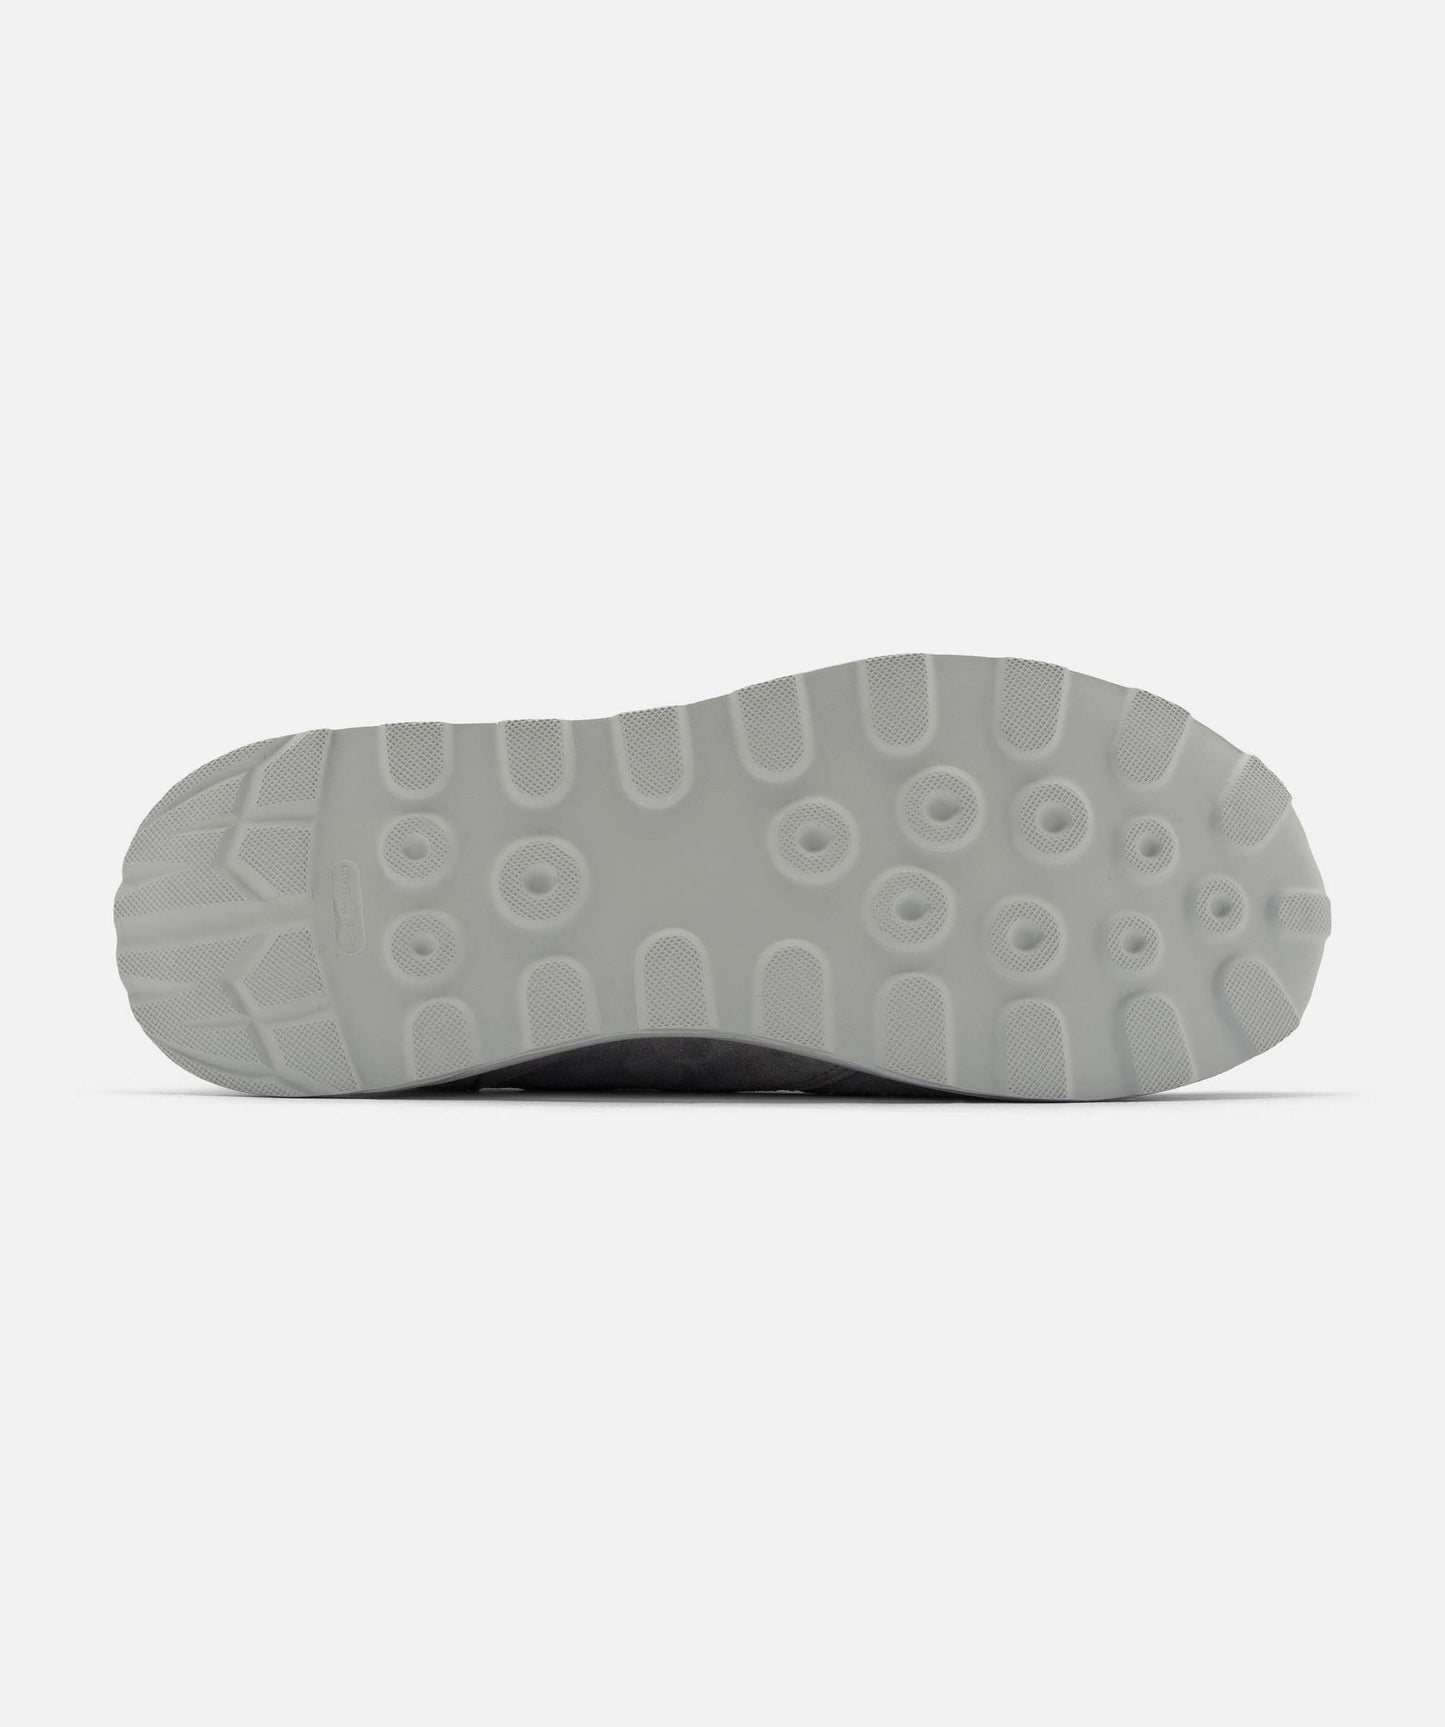 Larch Sneaker - Concrete